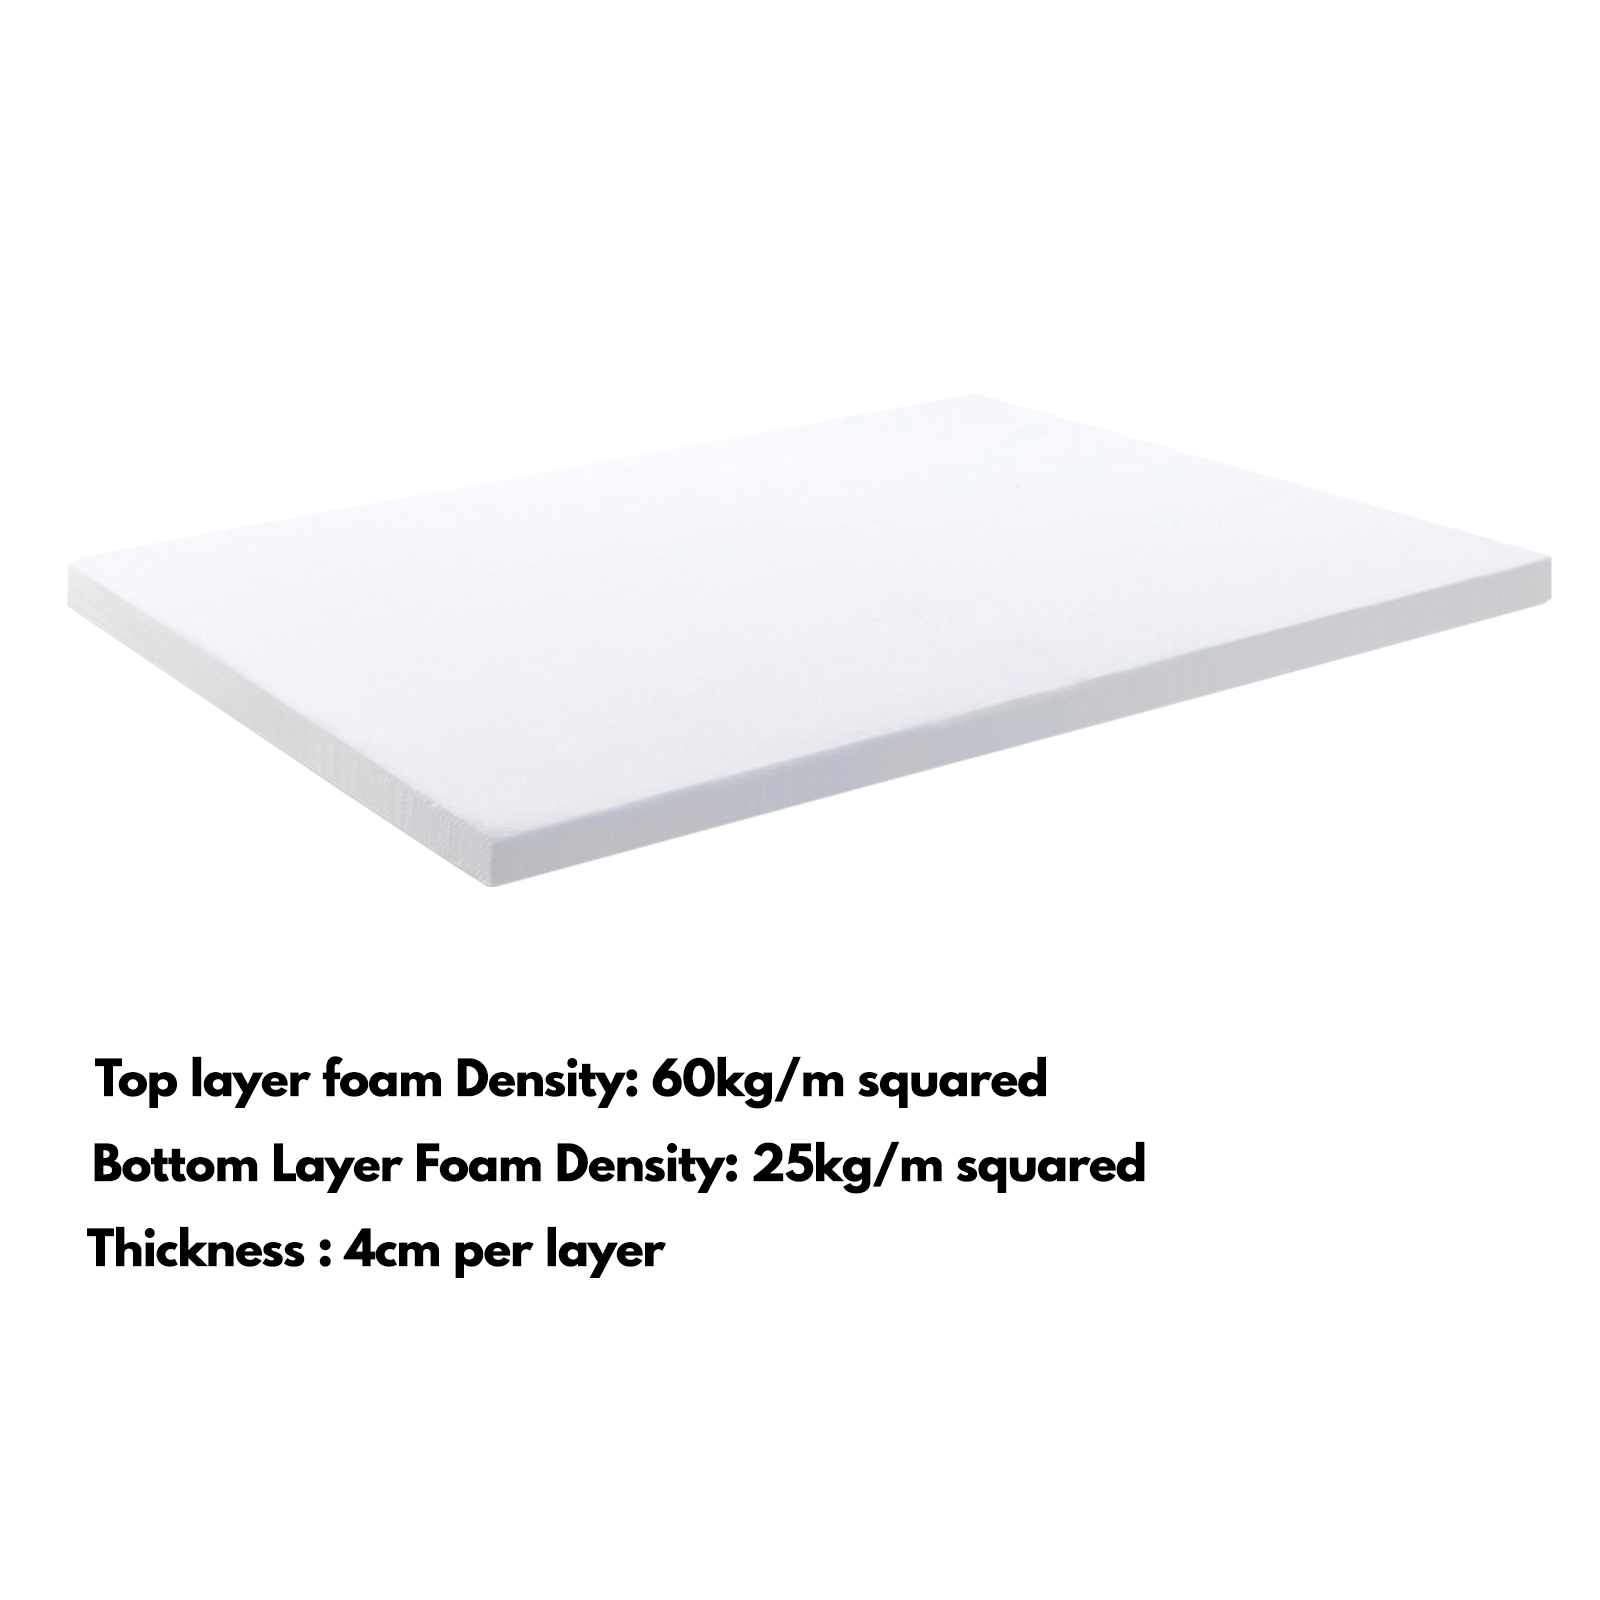 Double Size Dual Layer Cool Gel Memory Foam Anti-Skid 4cm Topper